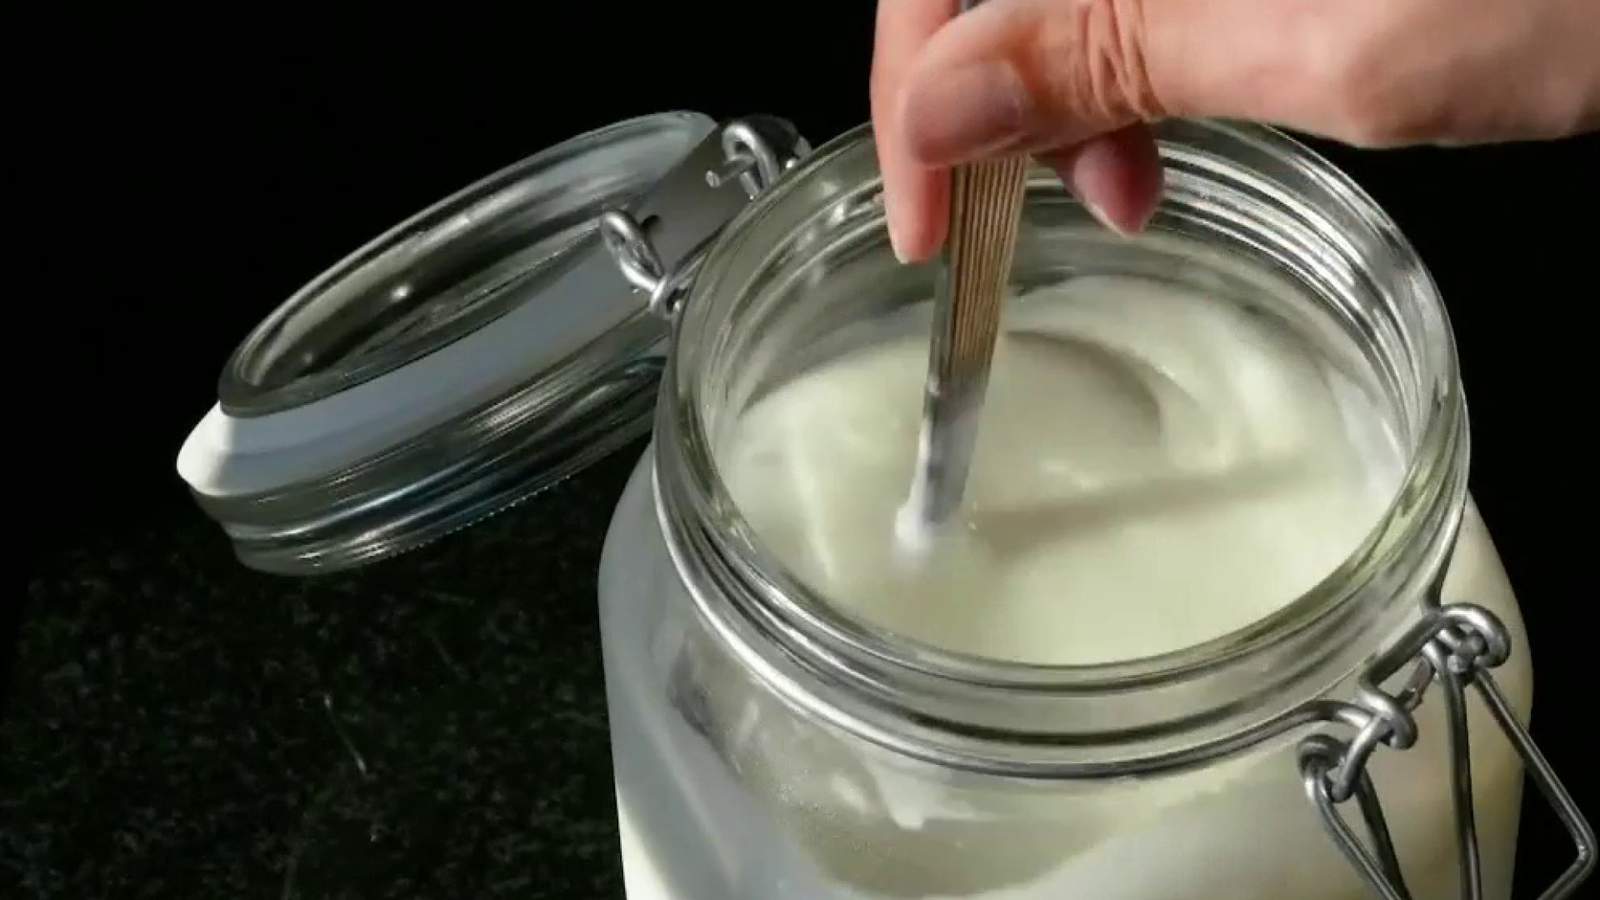 How to make healthier yogurt at home